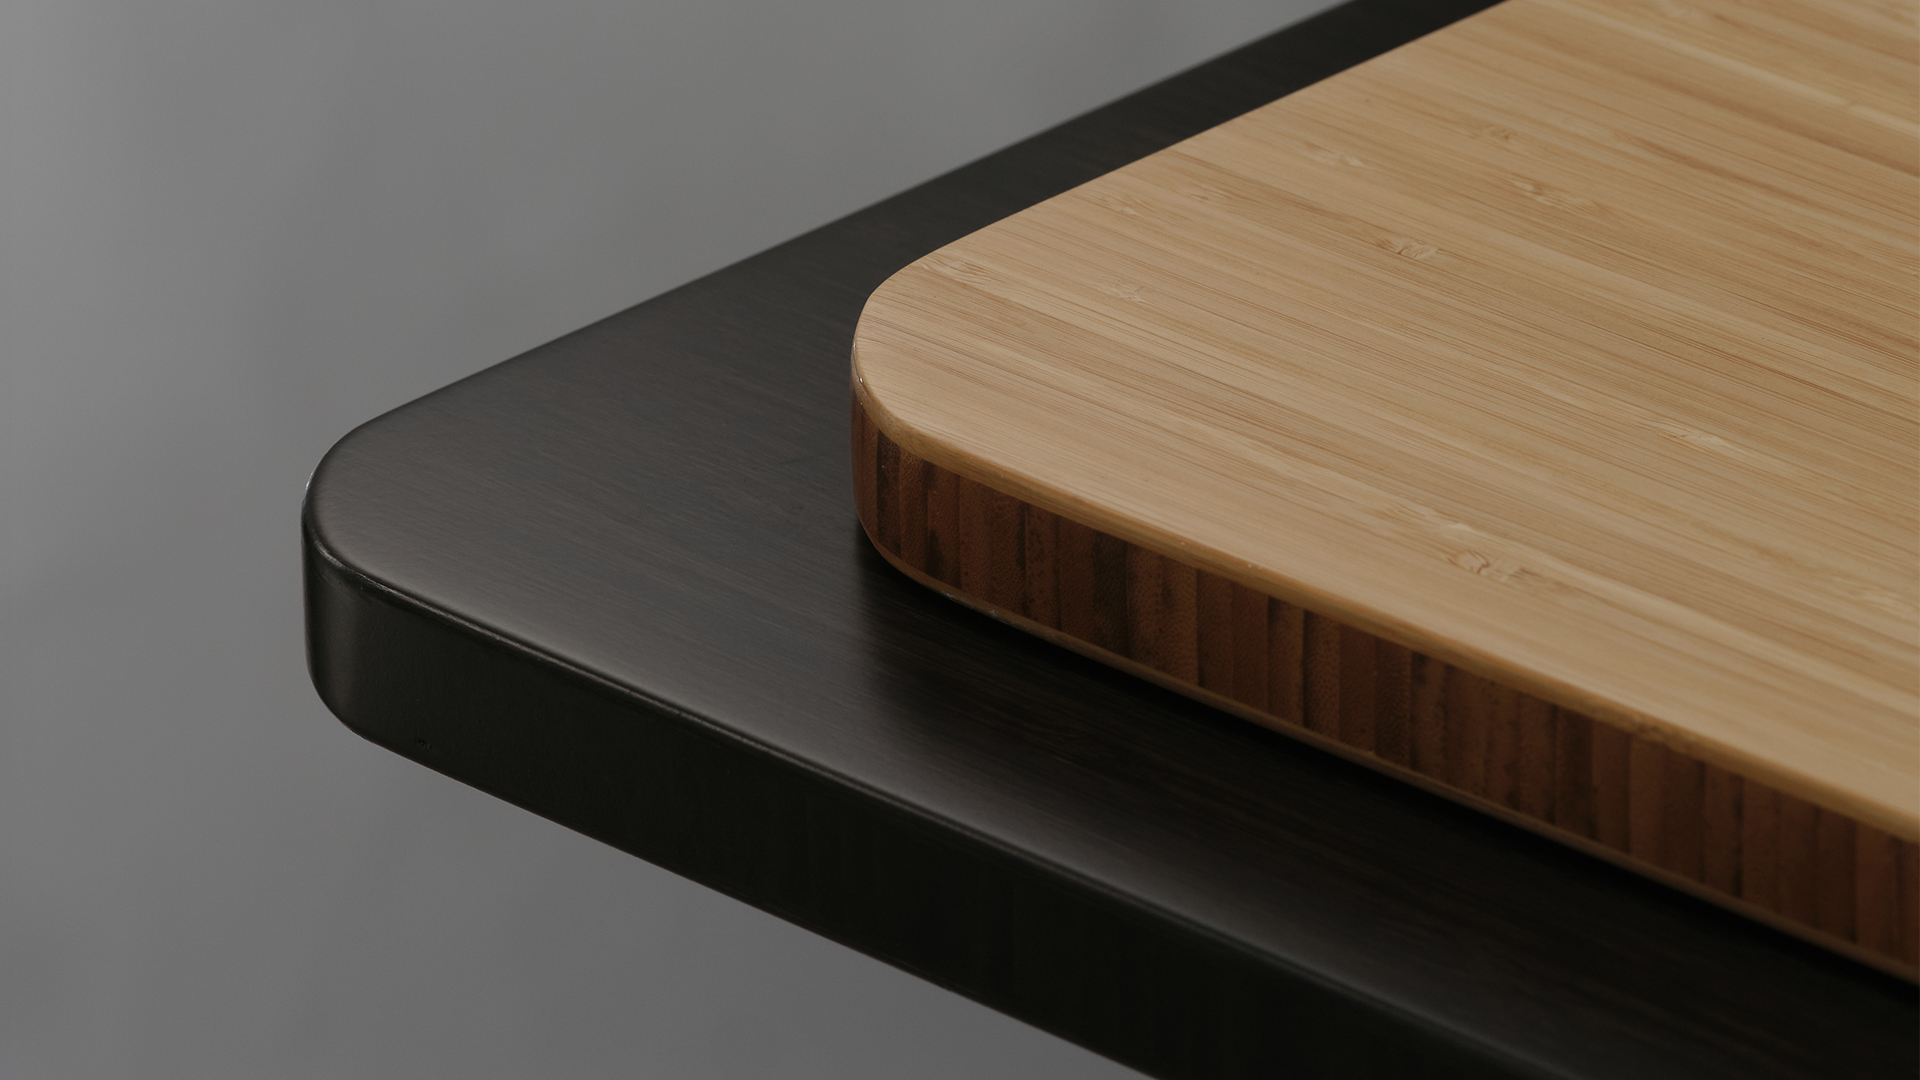 Desky Bamboo Desk Tops